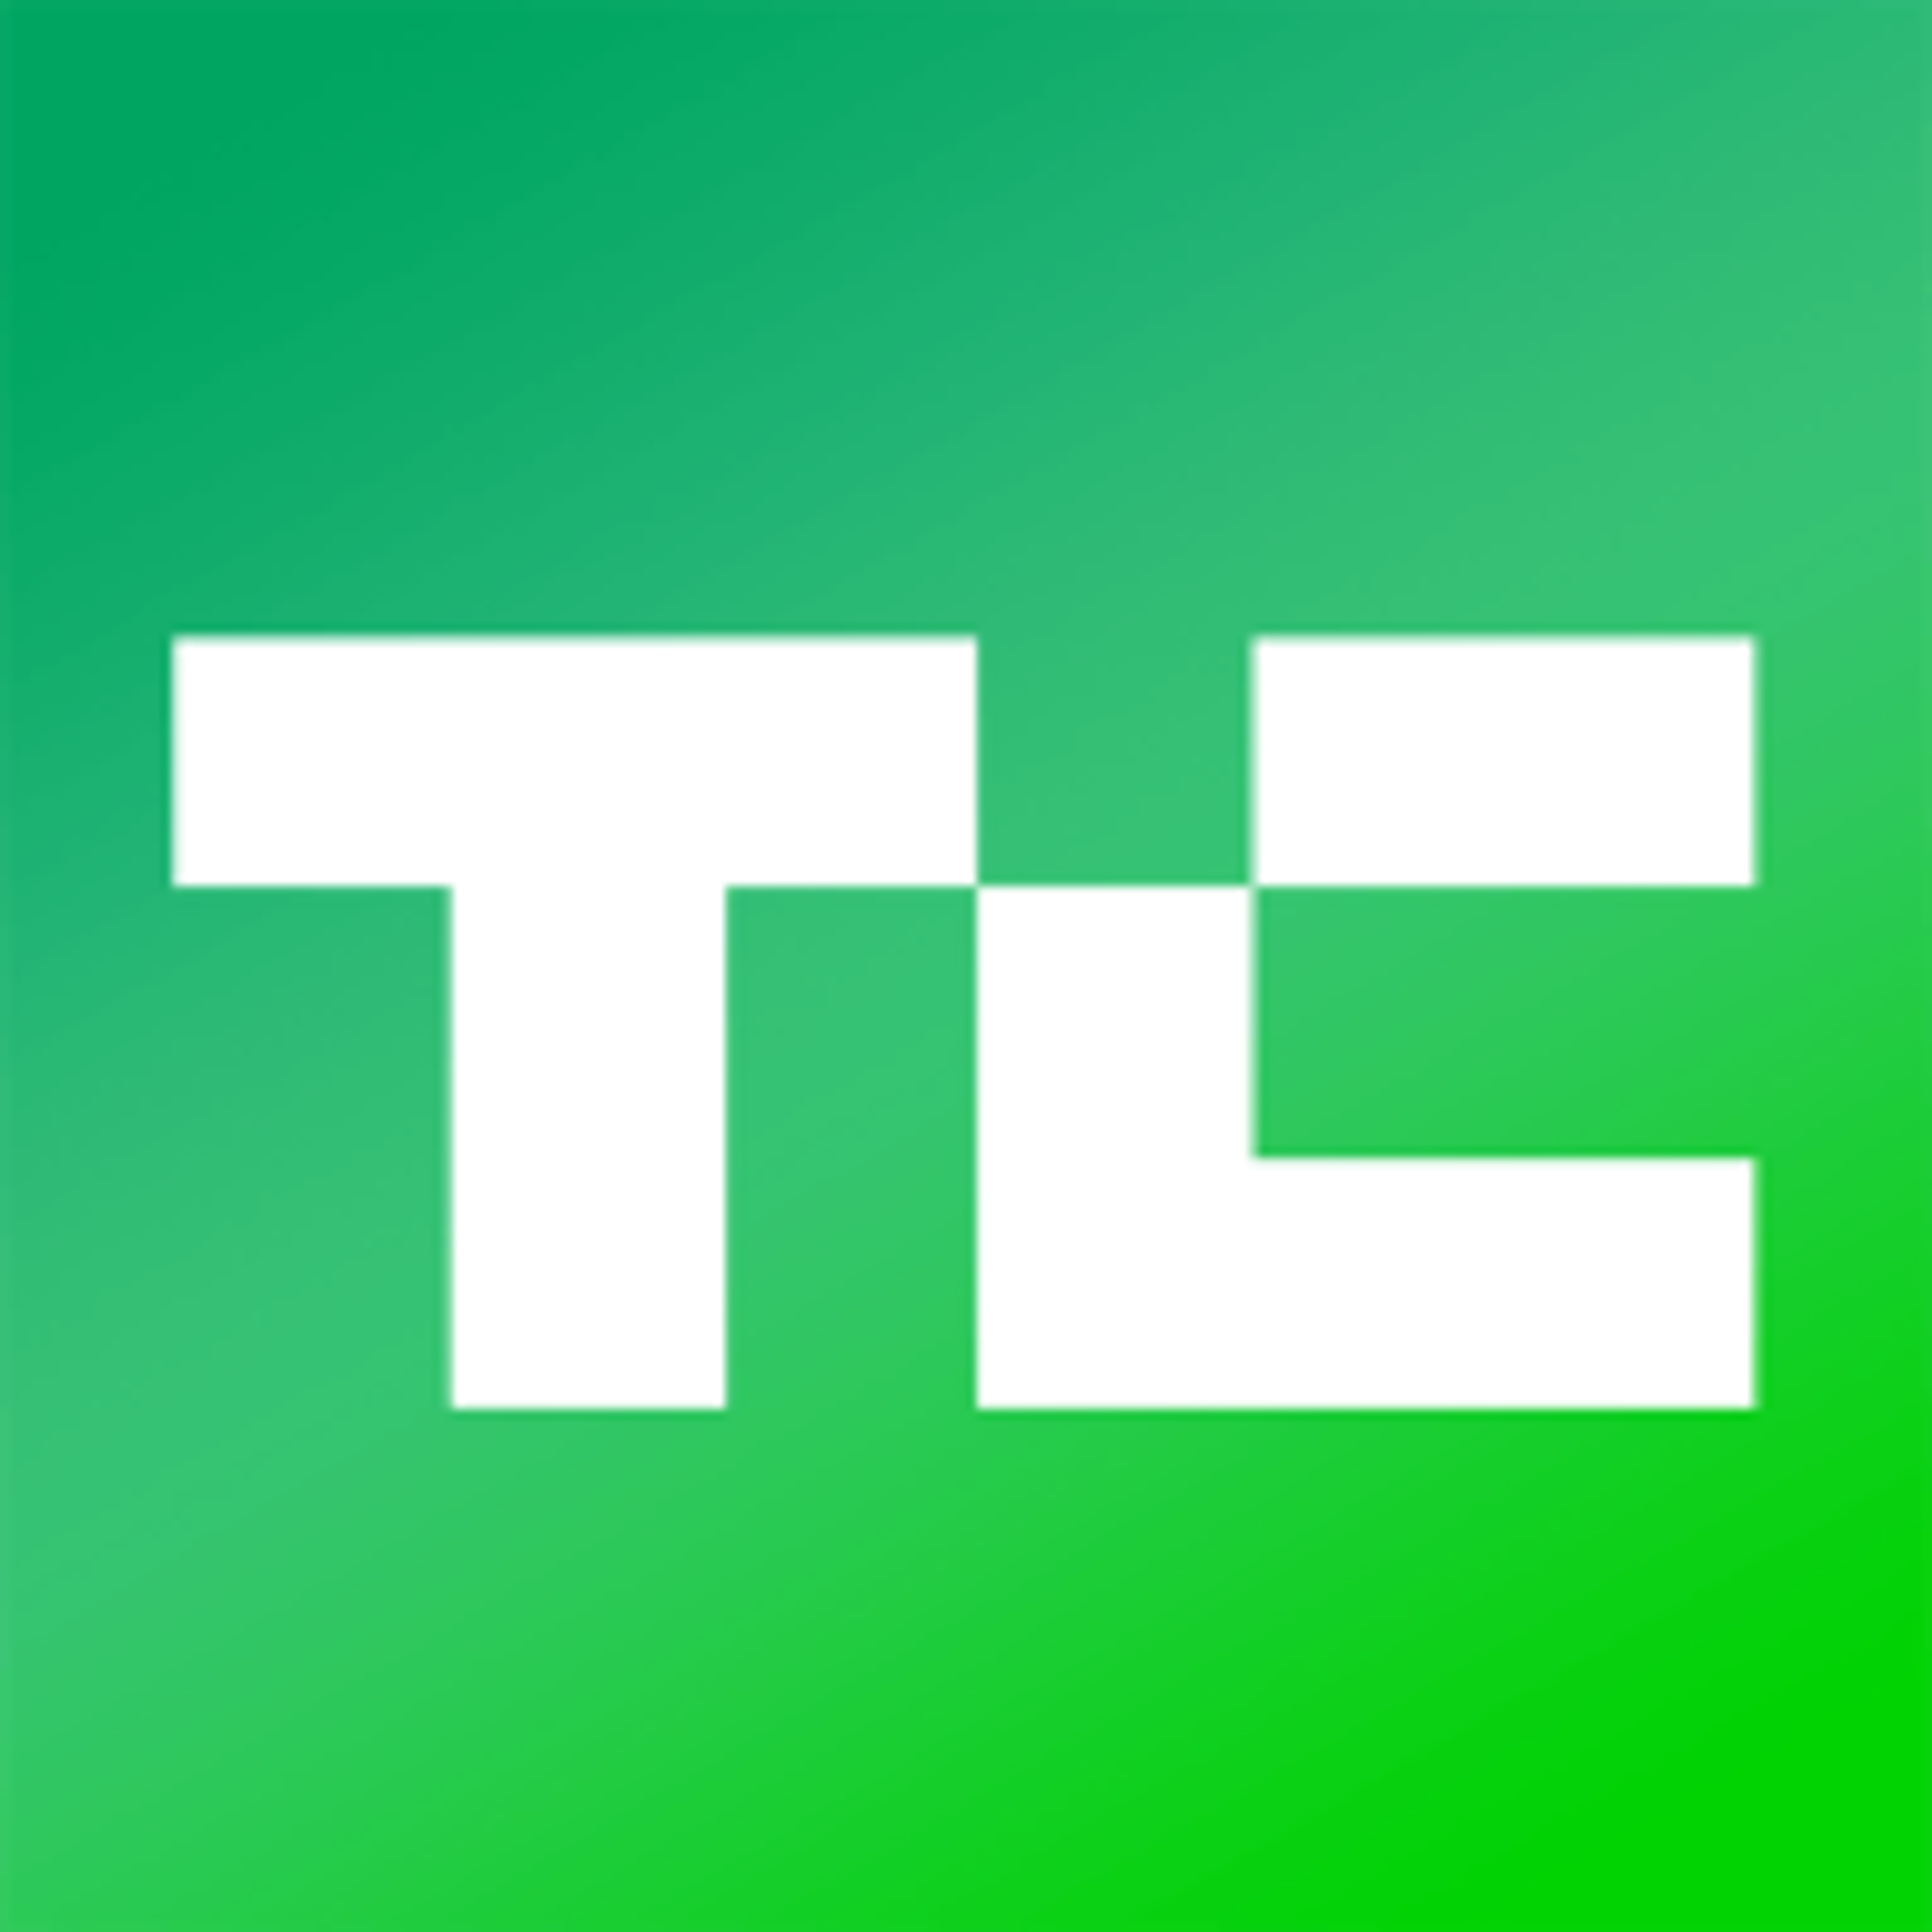 TikTok launches its own AR development platform, Effect House